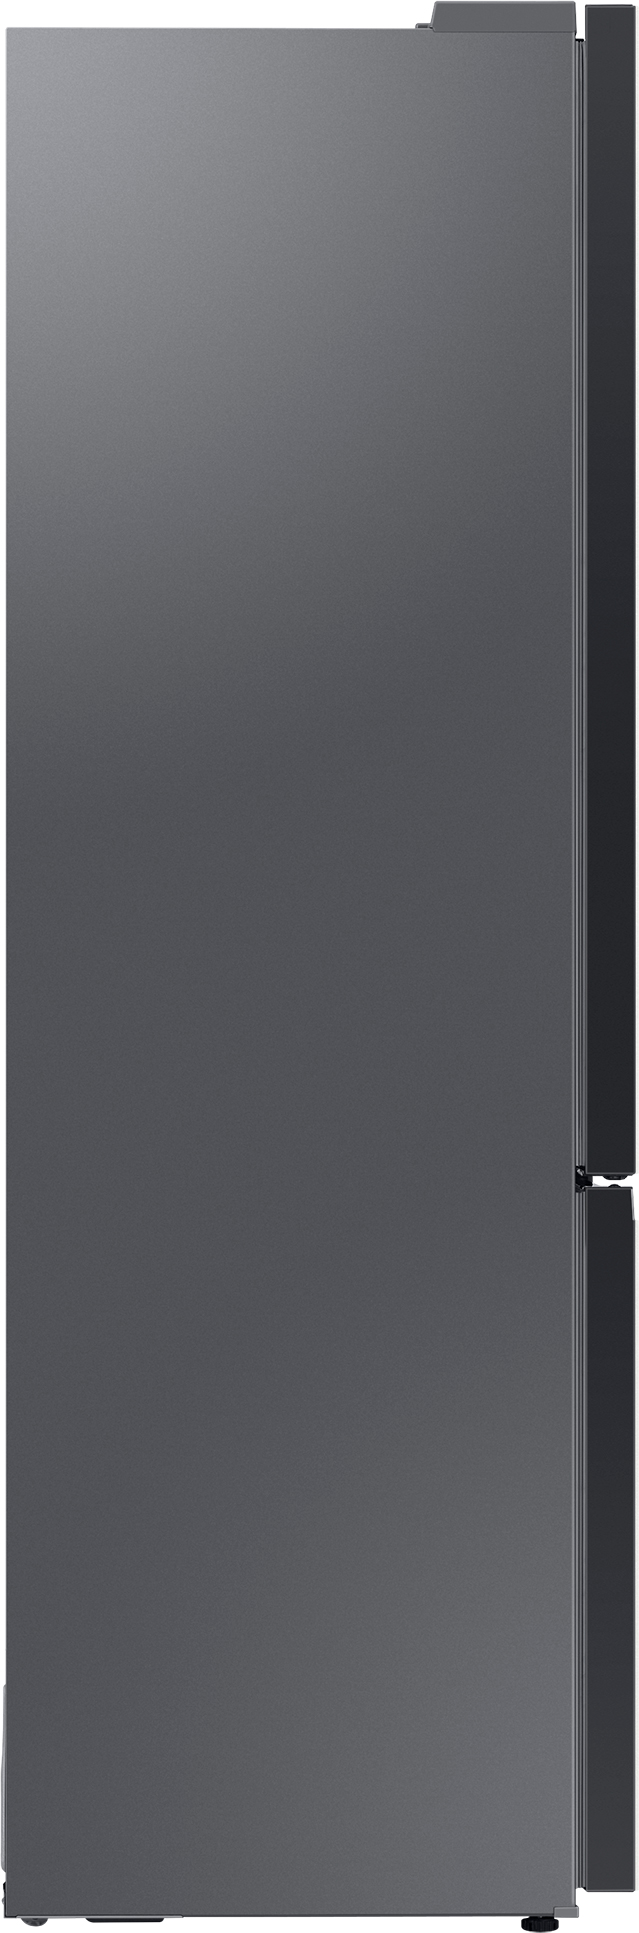 Холодильник Samsung RB38A6B6239/UA обзор - фото 11